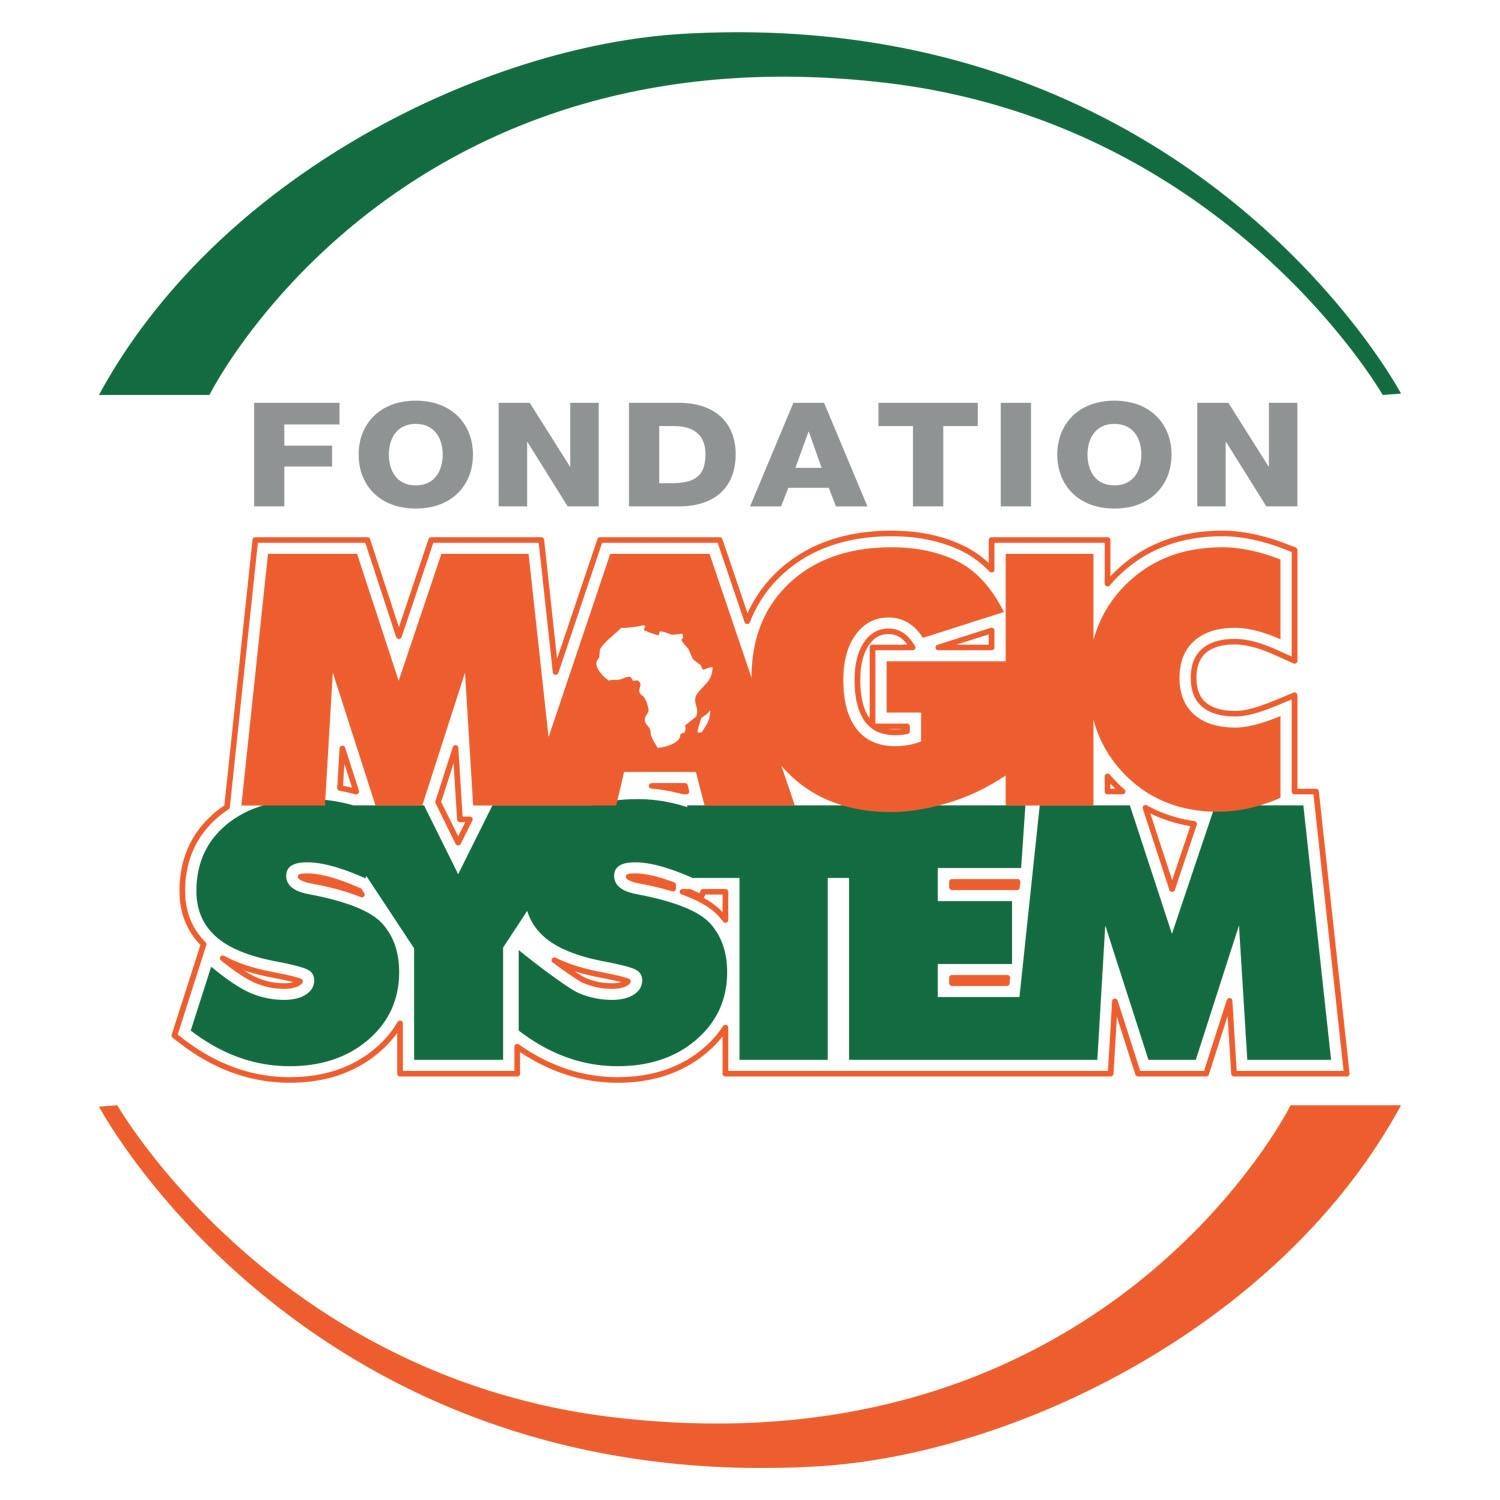 FONDATION-MAGIC-SYSTEM